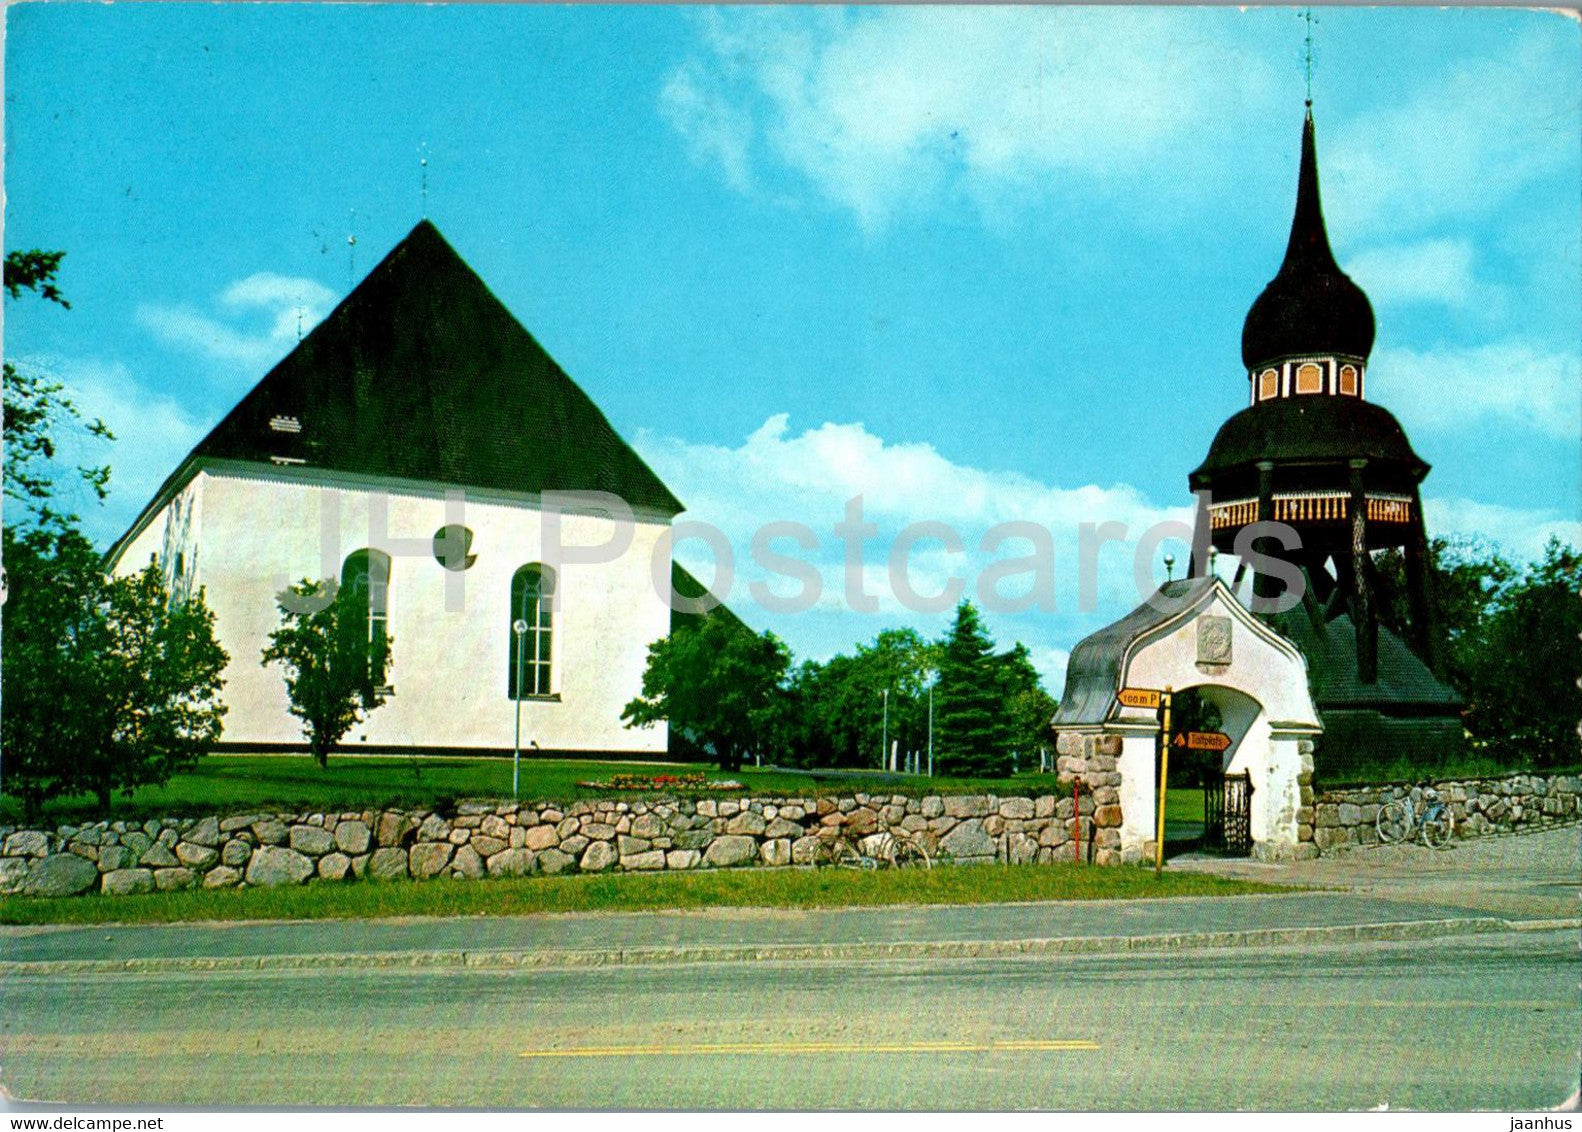 Ljusdal kyrkan - church - 1972 - Sweden - used - JH Postcards